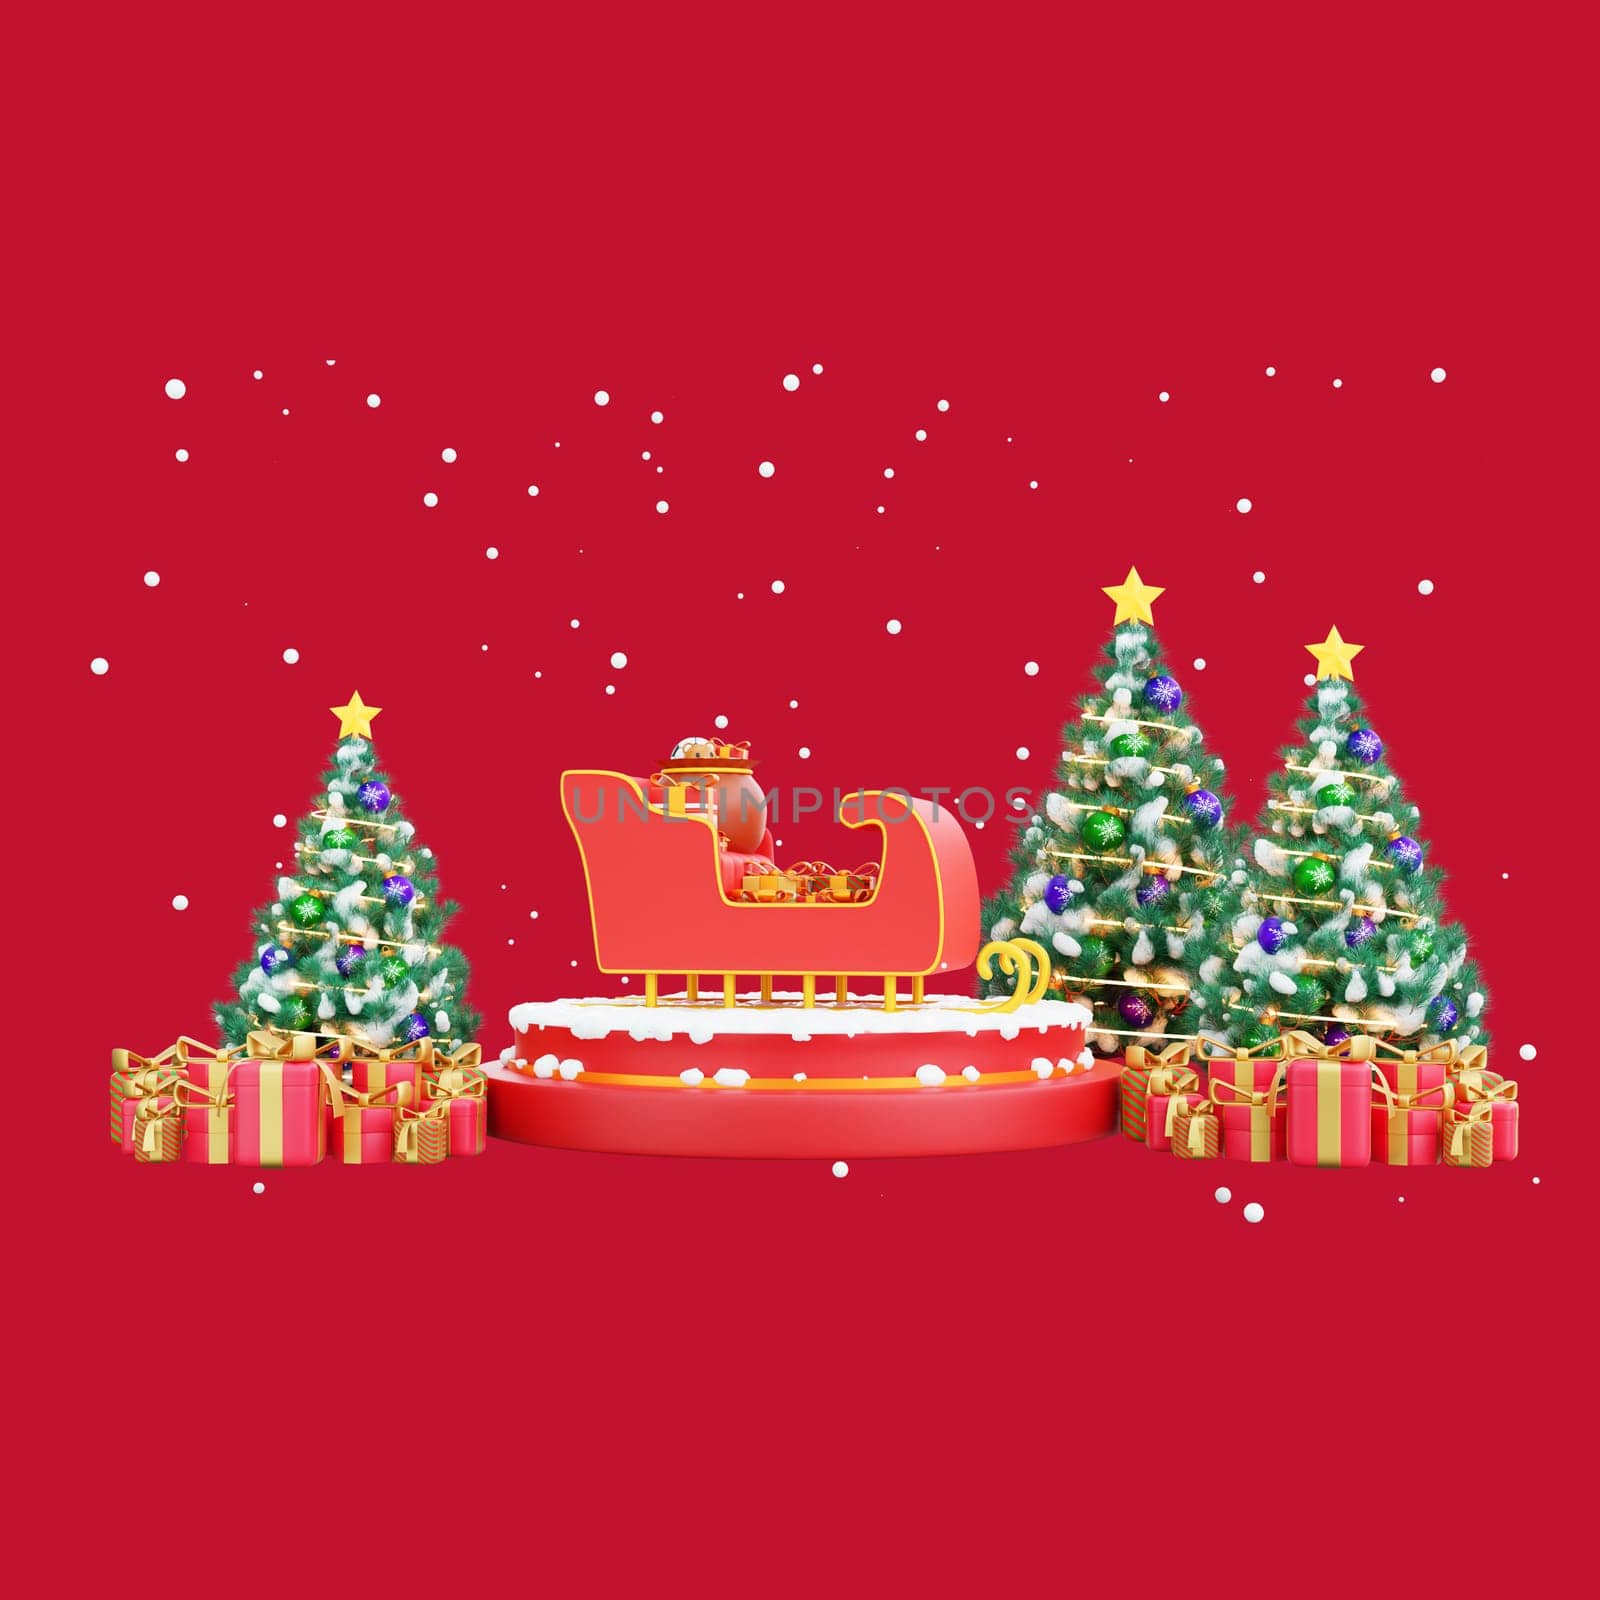 3D illustration of a festive Christmas scene decoration by Rahmat_Djayusman